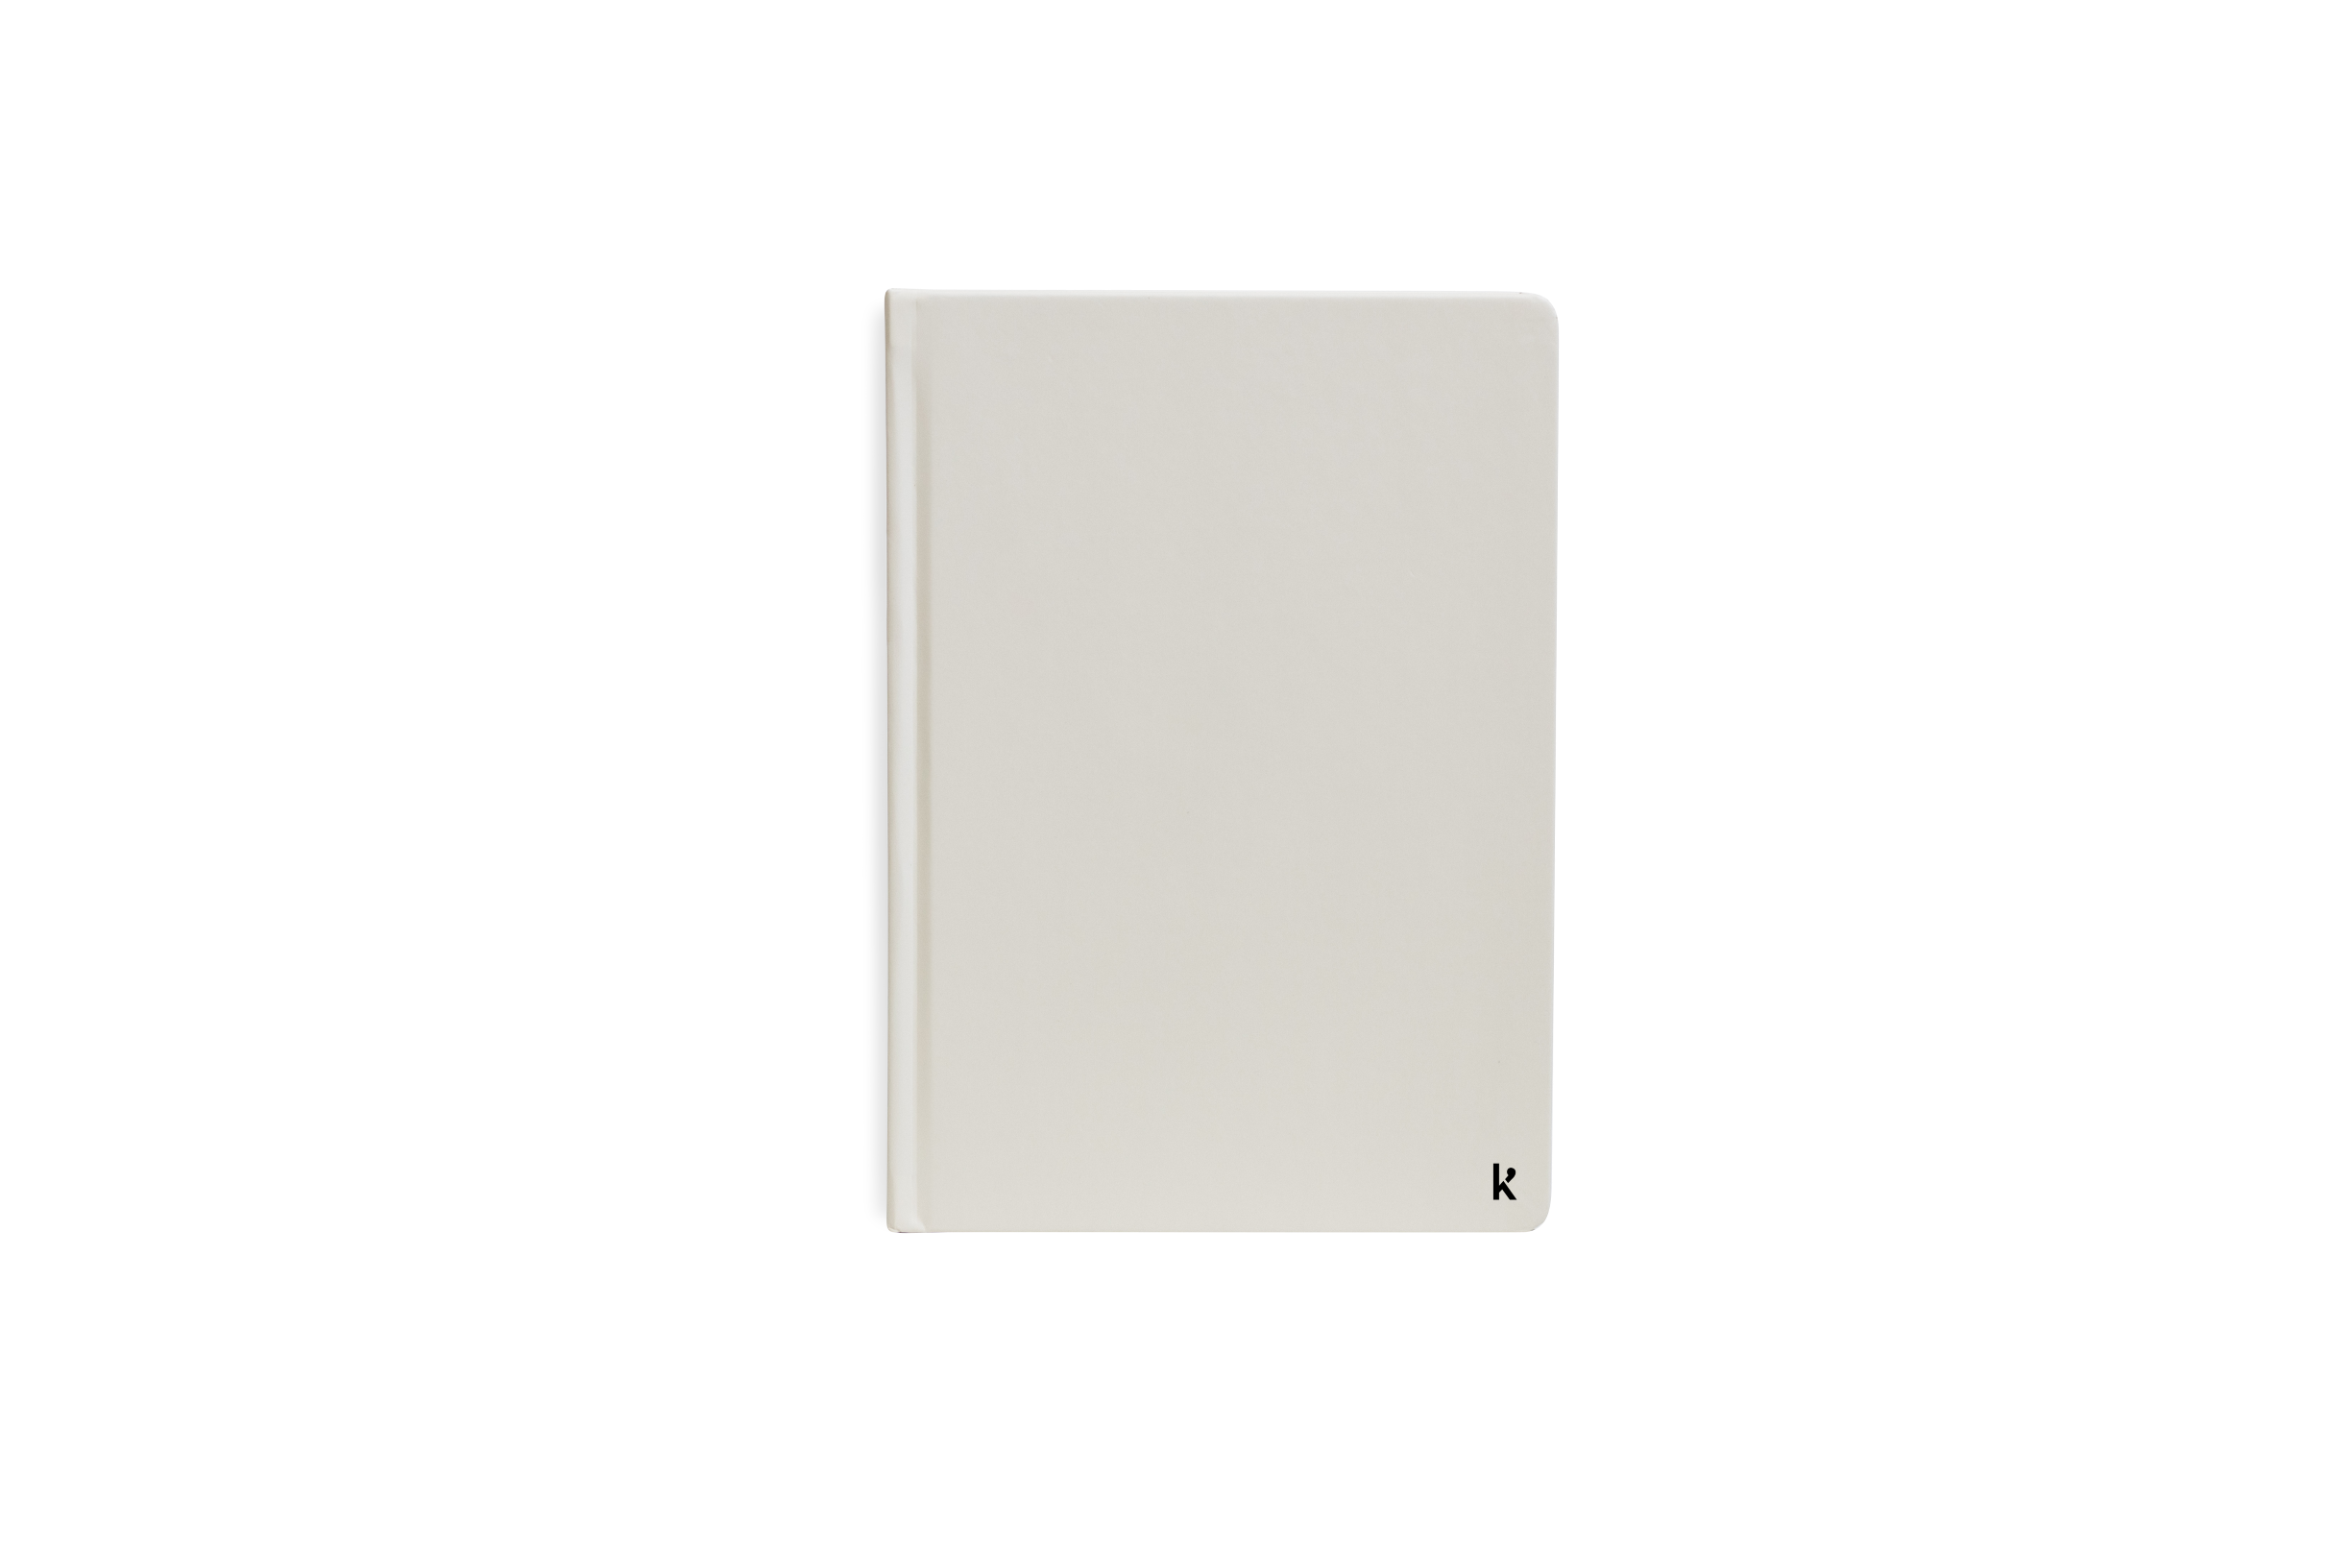 Karst A5 Hardcover Notebook Stone